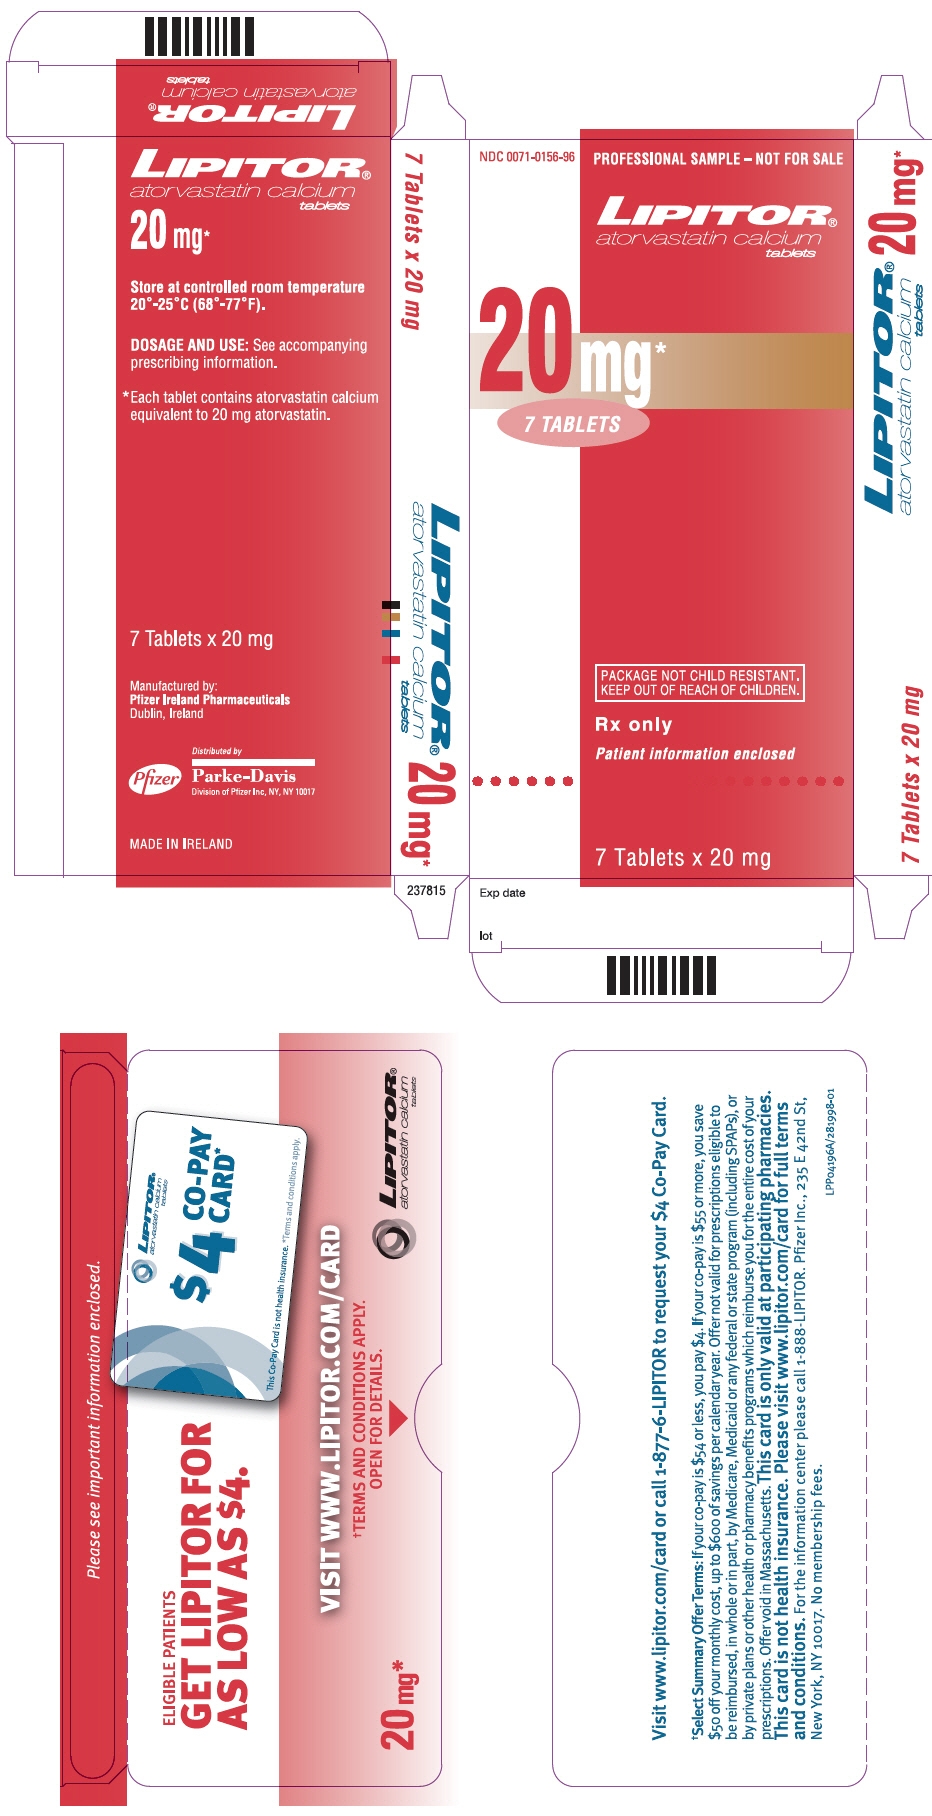 PRINCIPAL DISPLAY PANEL - 20 mg Tablet Packet Carton